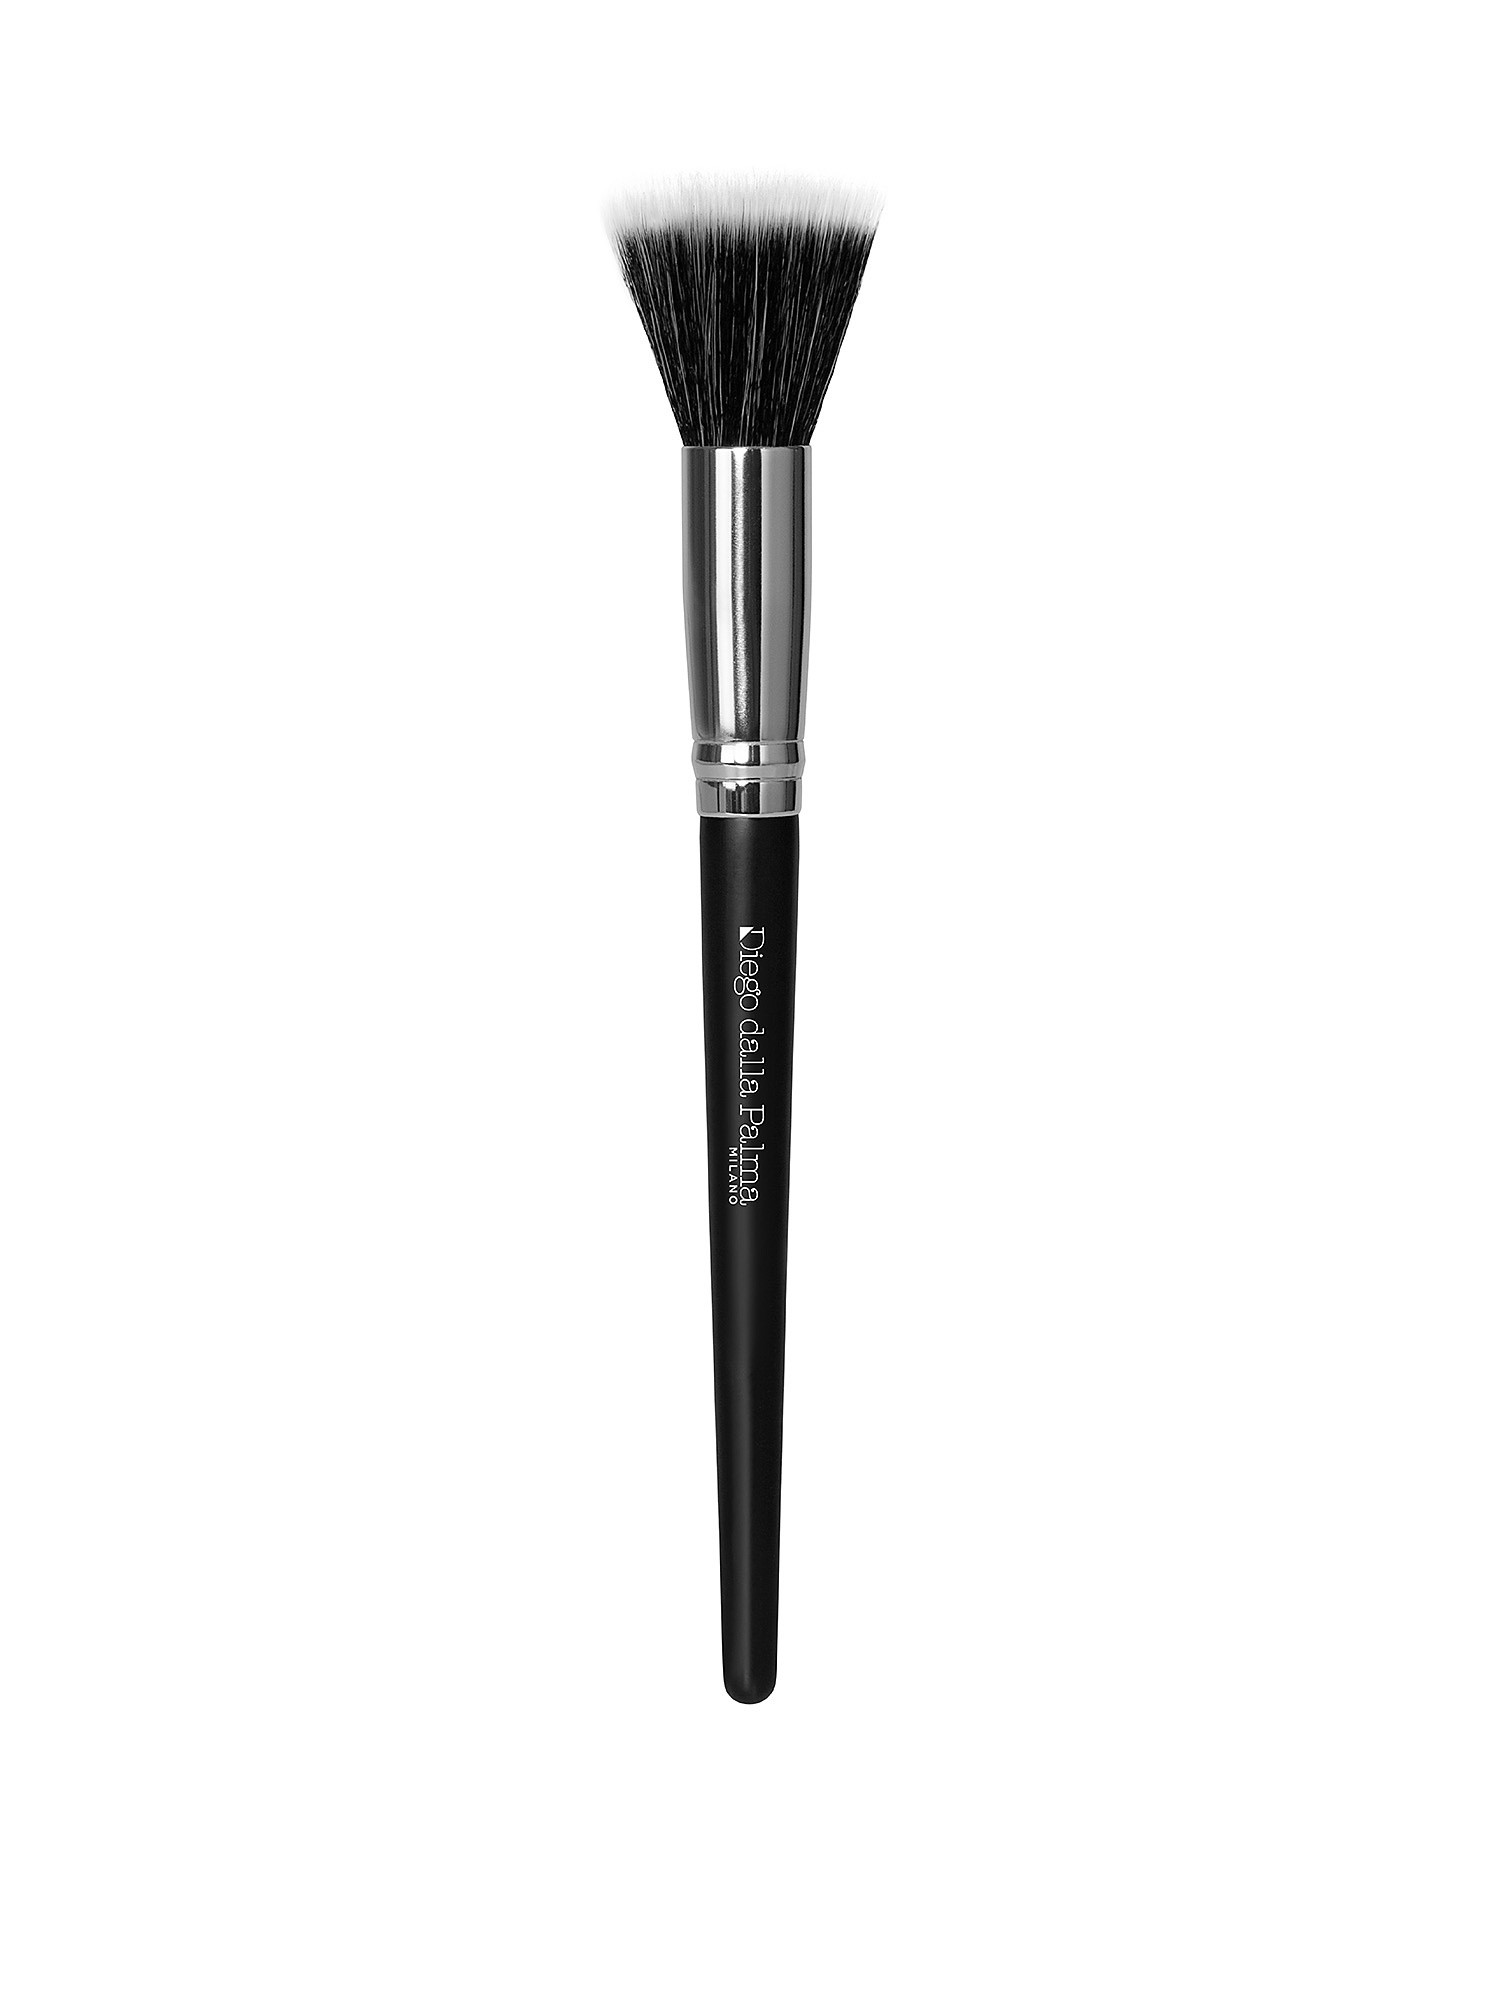 STIPPLING BRUSH - Contouring brush 21, Black, large image number 0